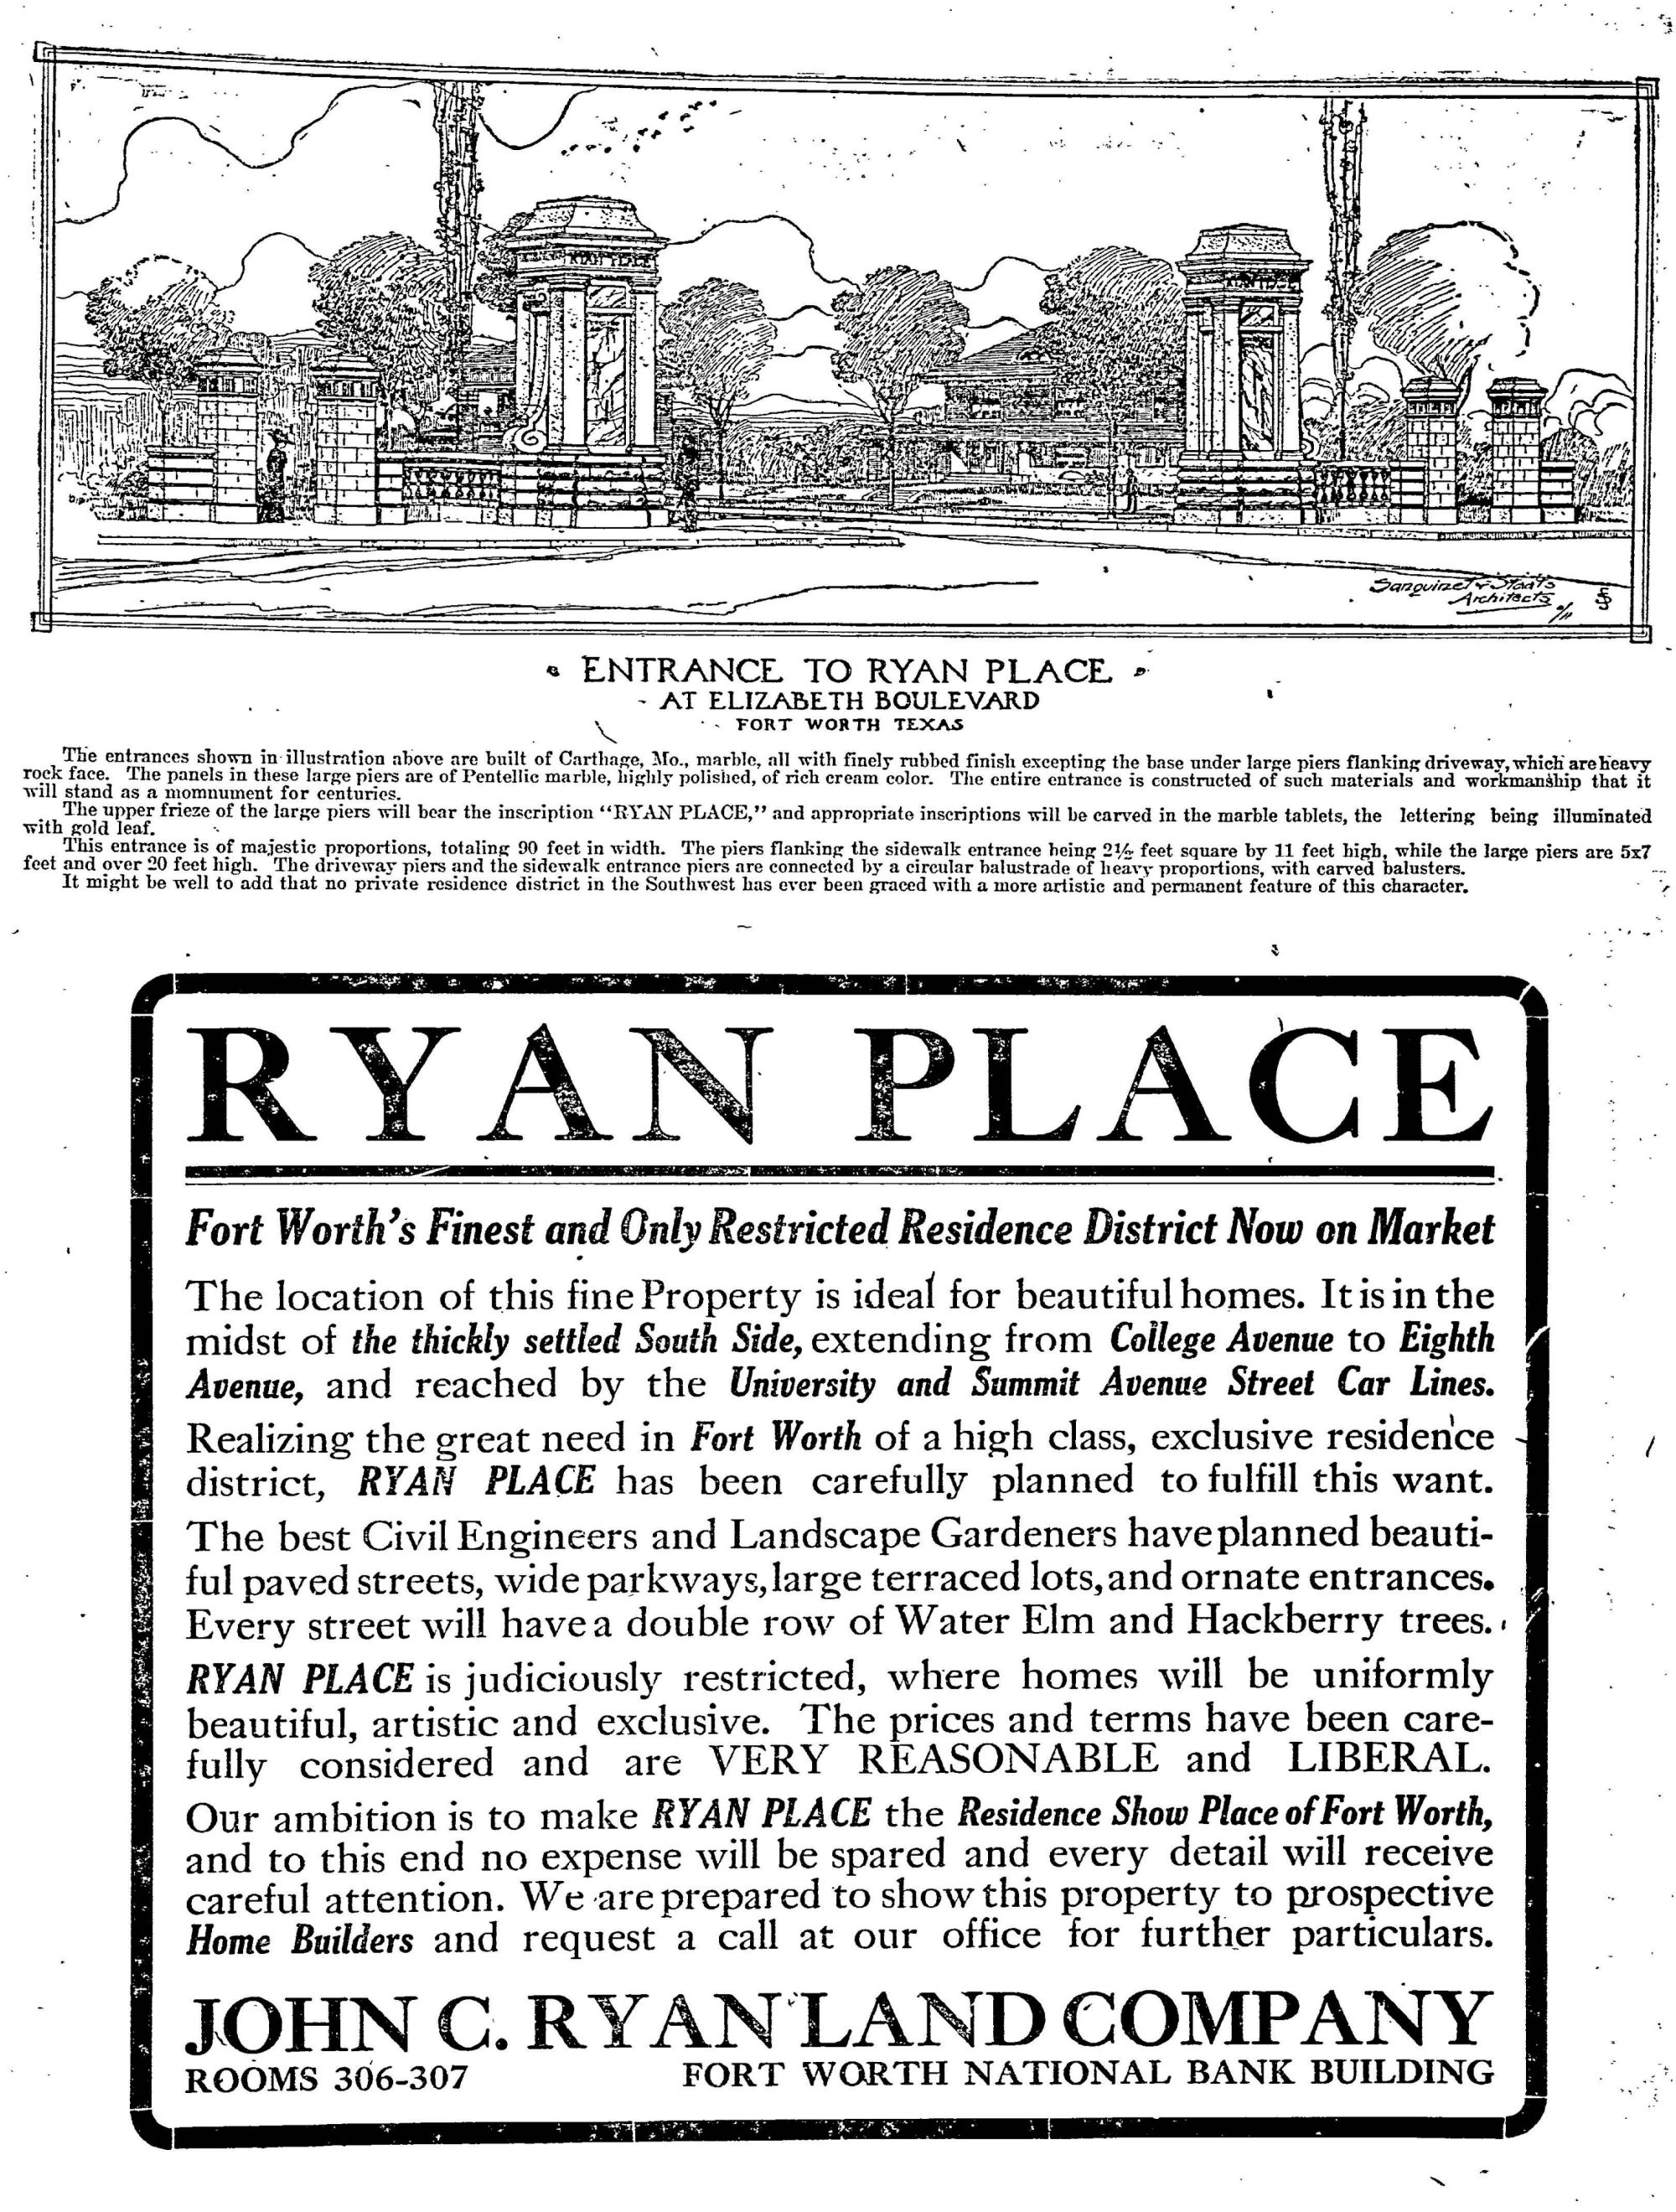 ryan place 1911 ad